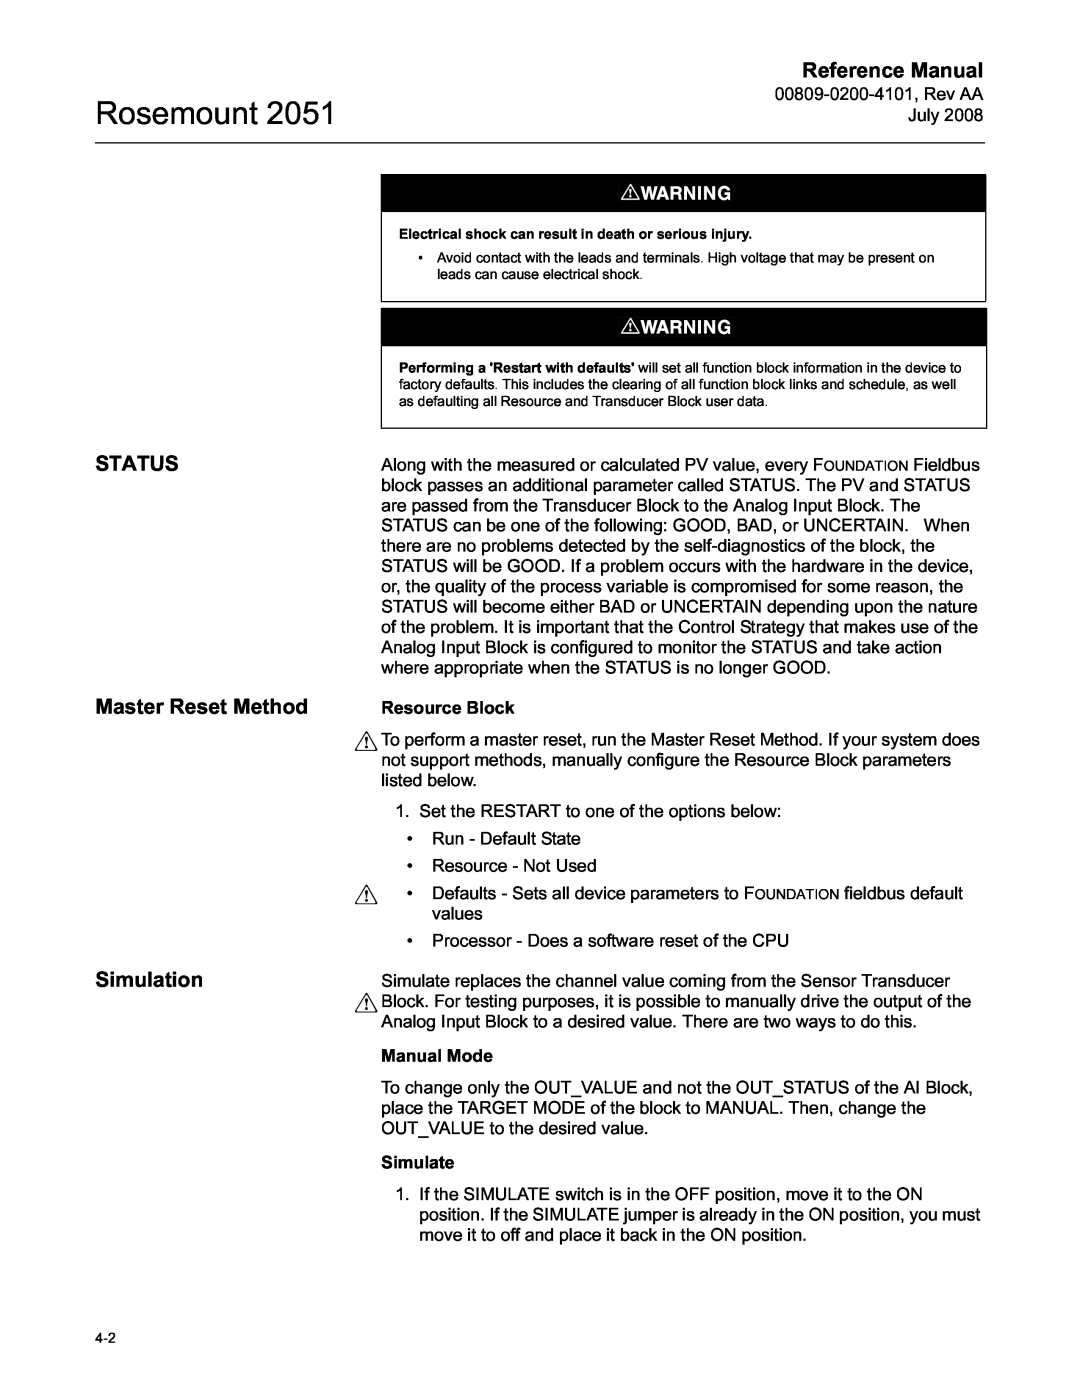 Emerson Process Management 2051 manual STATUS Master Reset Method Simulation, Rosemount, Reference Manual 